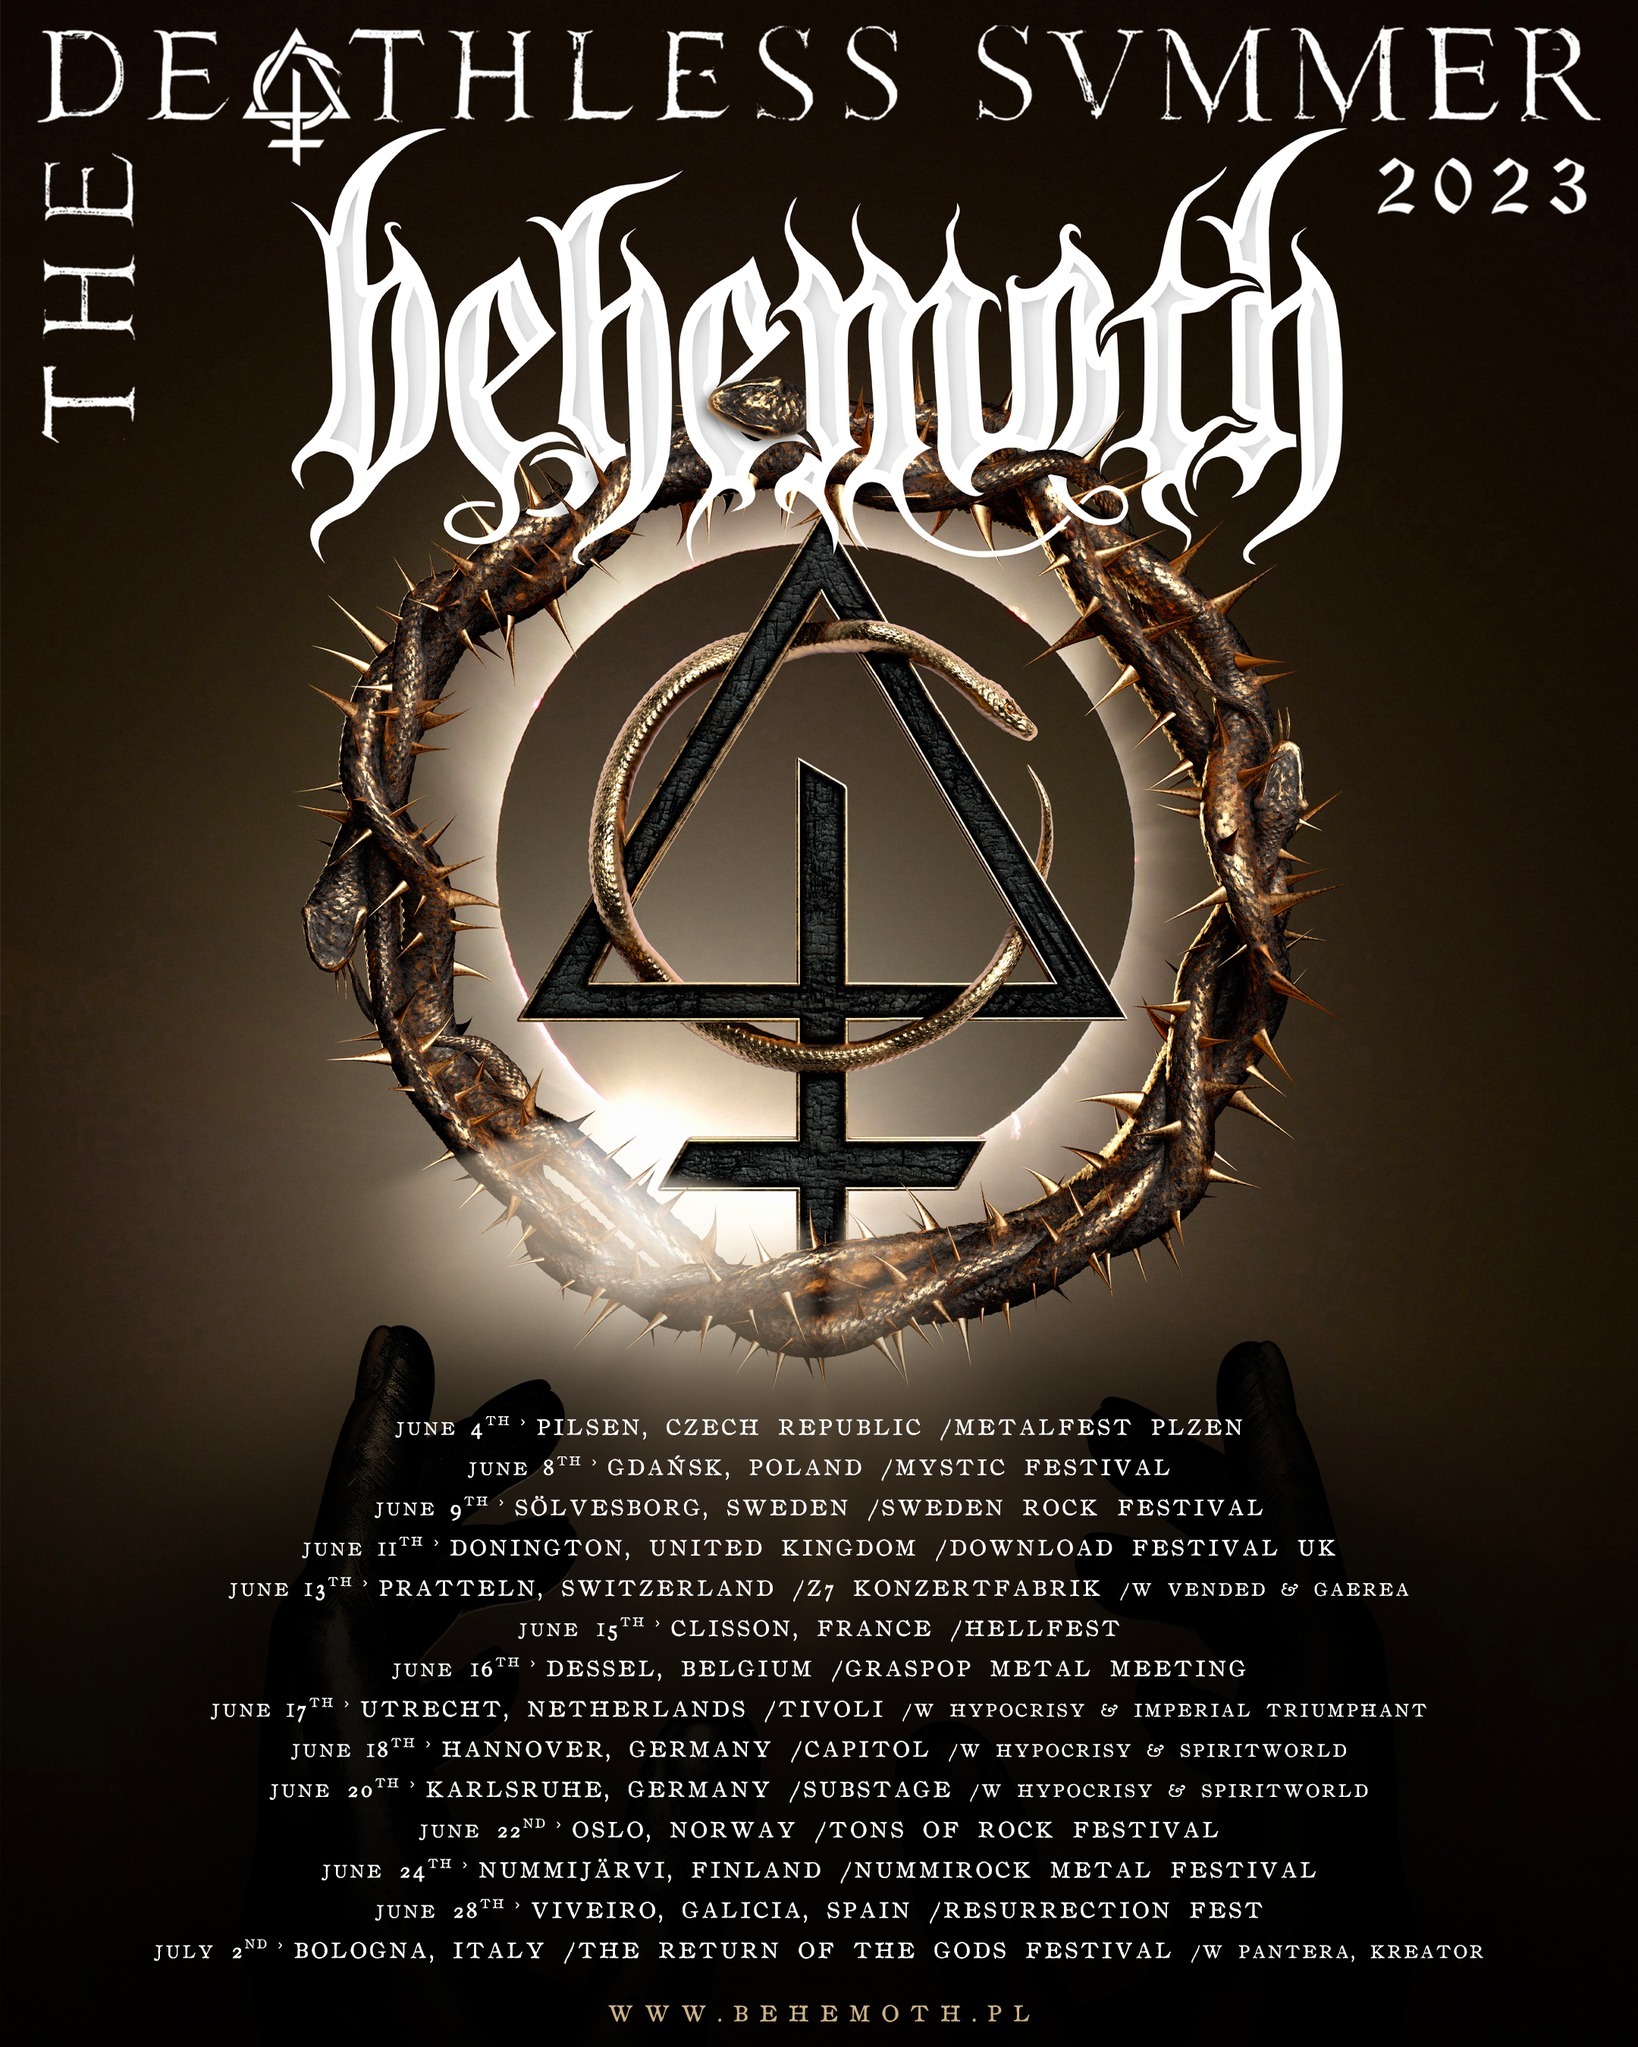 Behemoth - The Deathless Summer 2023